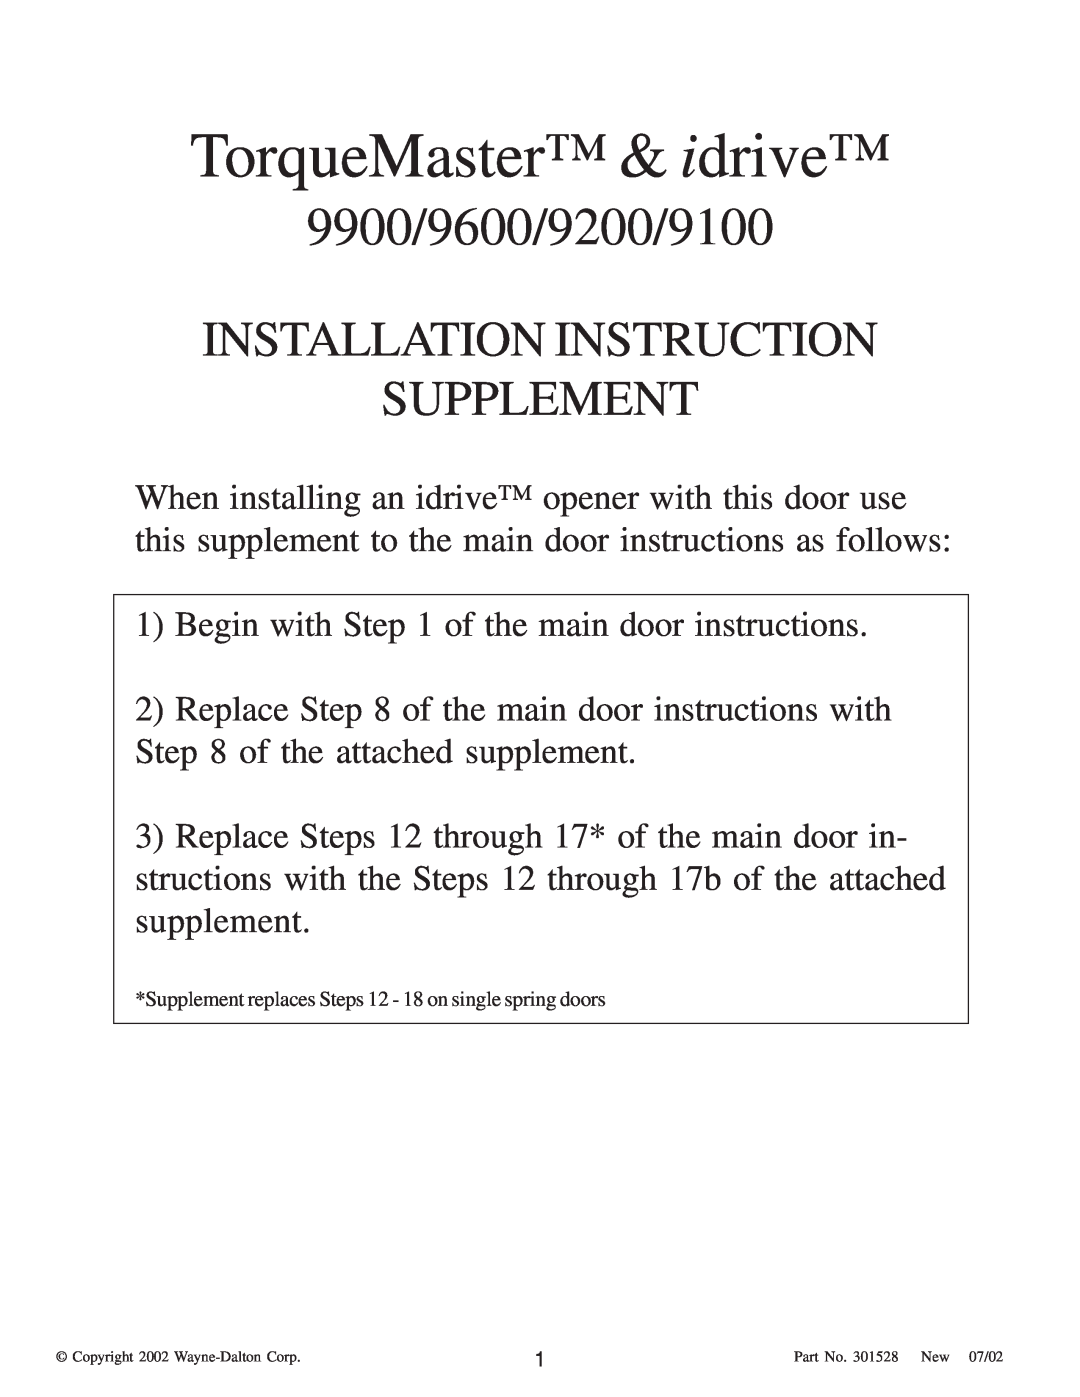 Wayne-Dalton 9600, 9900, 9200 installation instructions TorqueMaster Installation Instructions Layout 